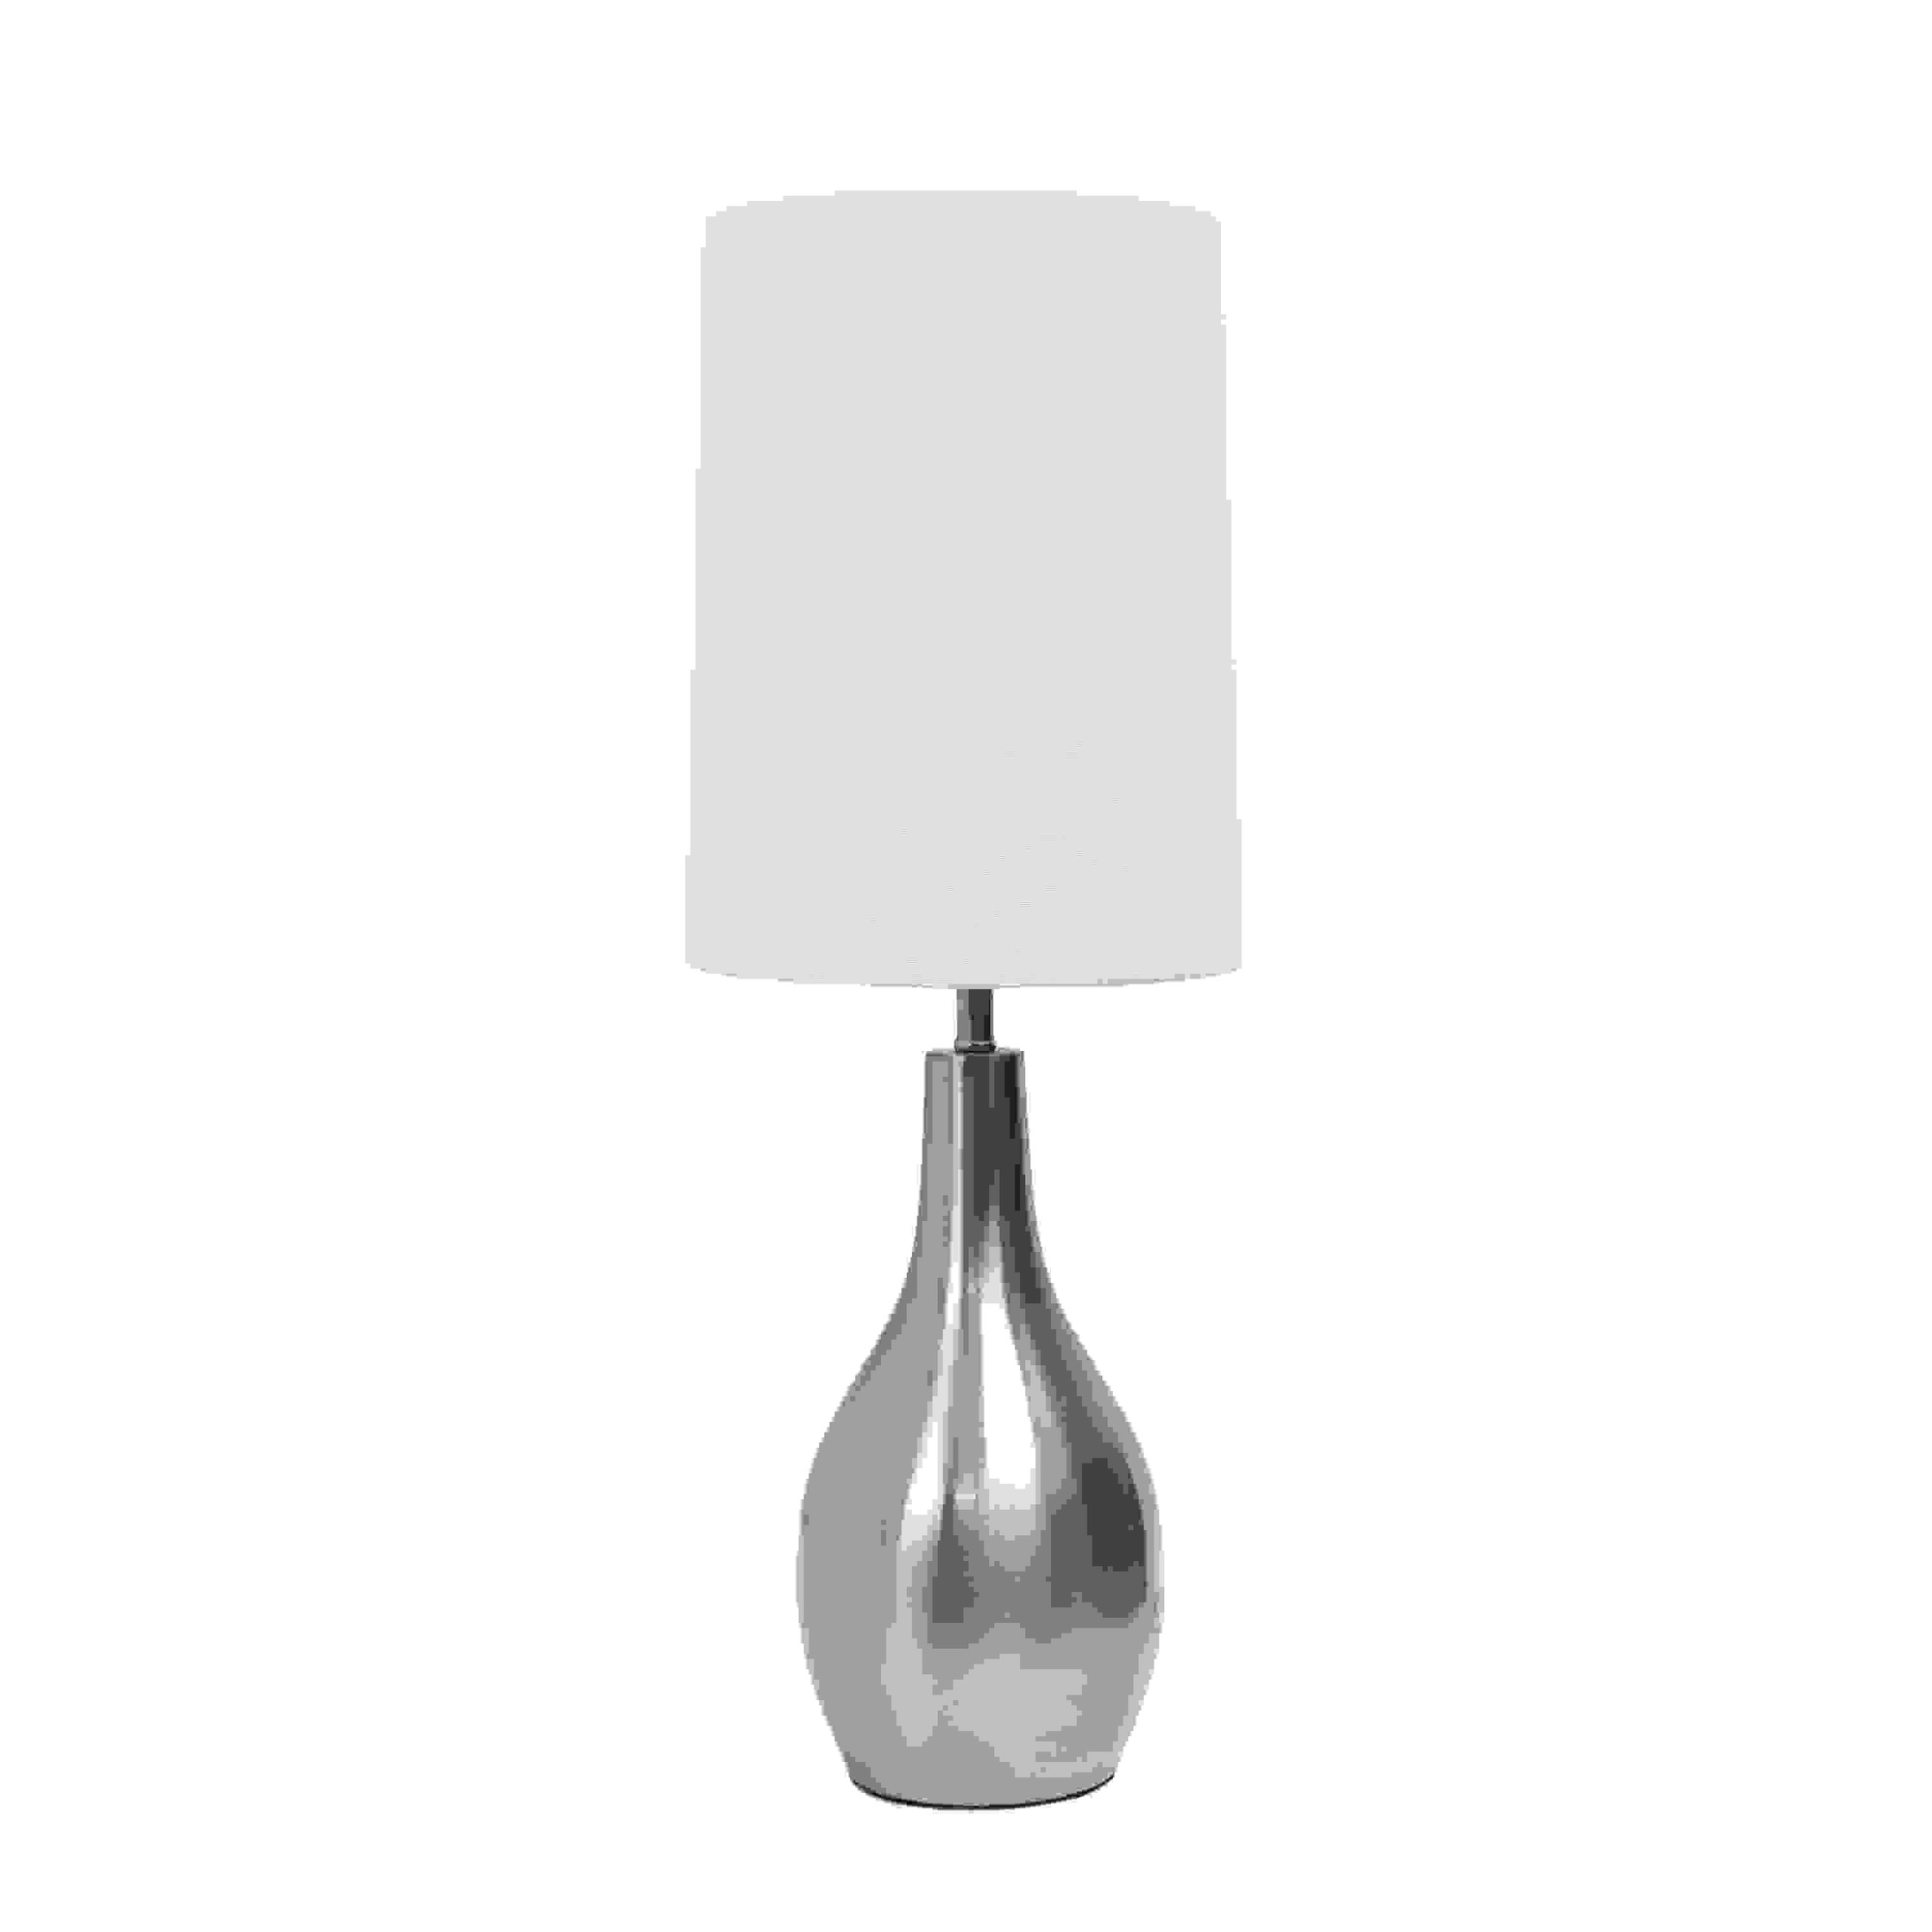 Simple Designs 1 Light Tear Drop Table Lamp, Brushed Nickel